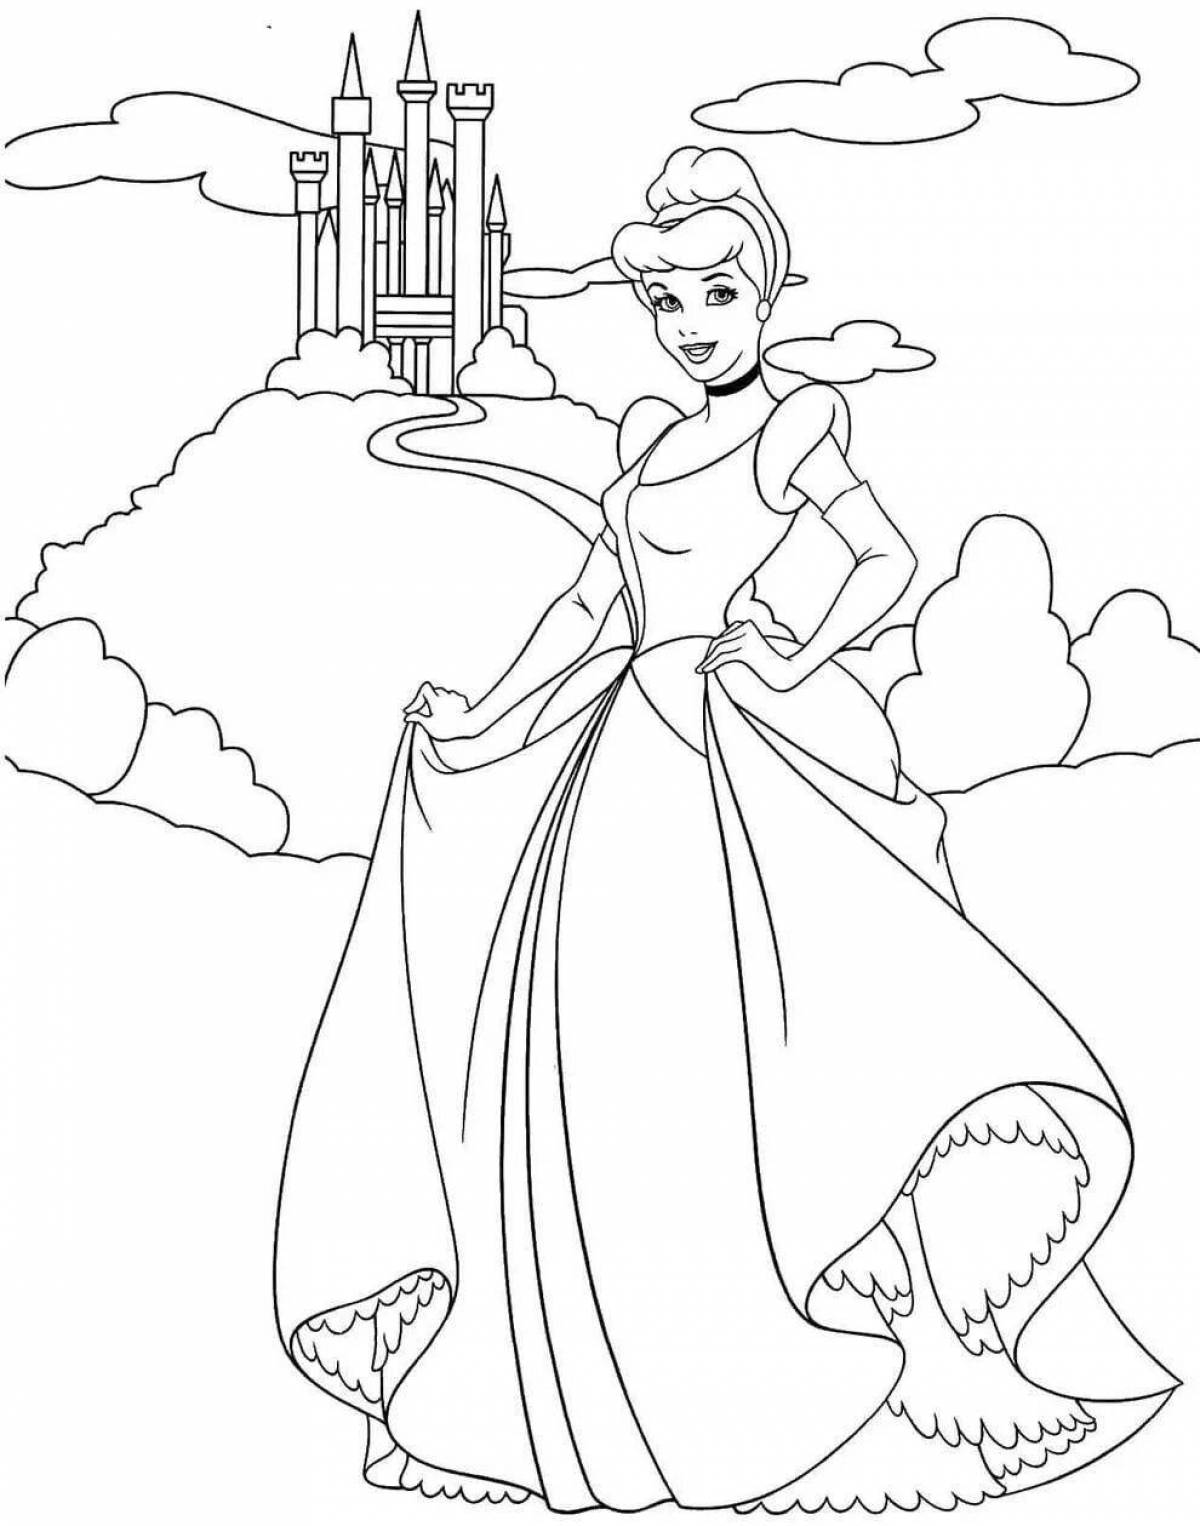 Glorious Cinderella princess coloring page